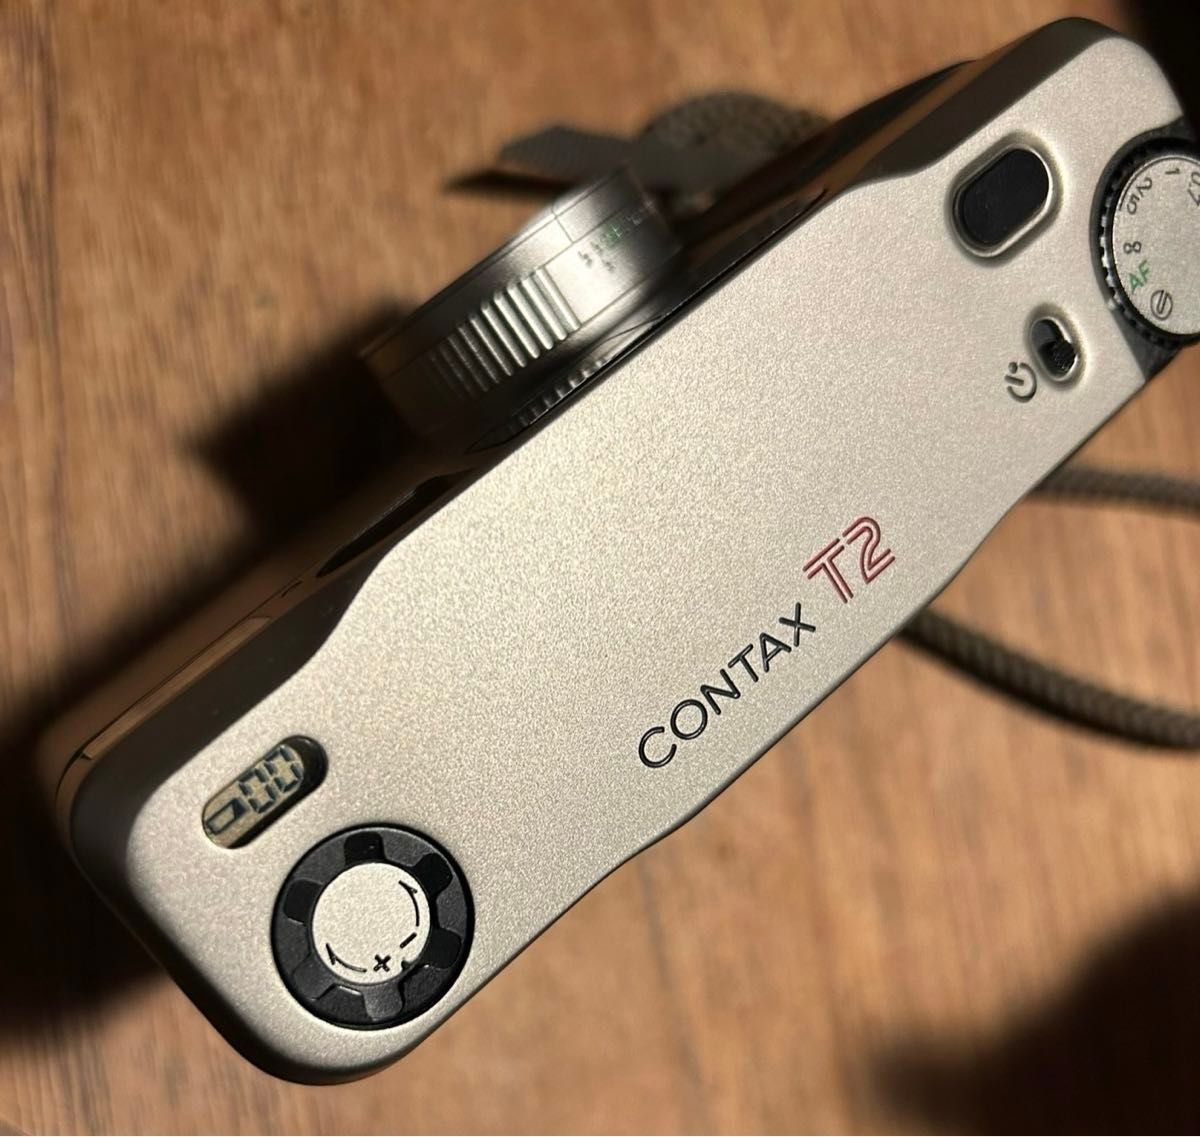 CONTAX コンタックス T2 コンパクトフィルムカメラ 元箱付き